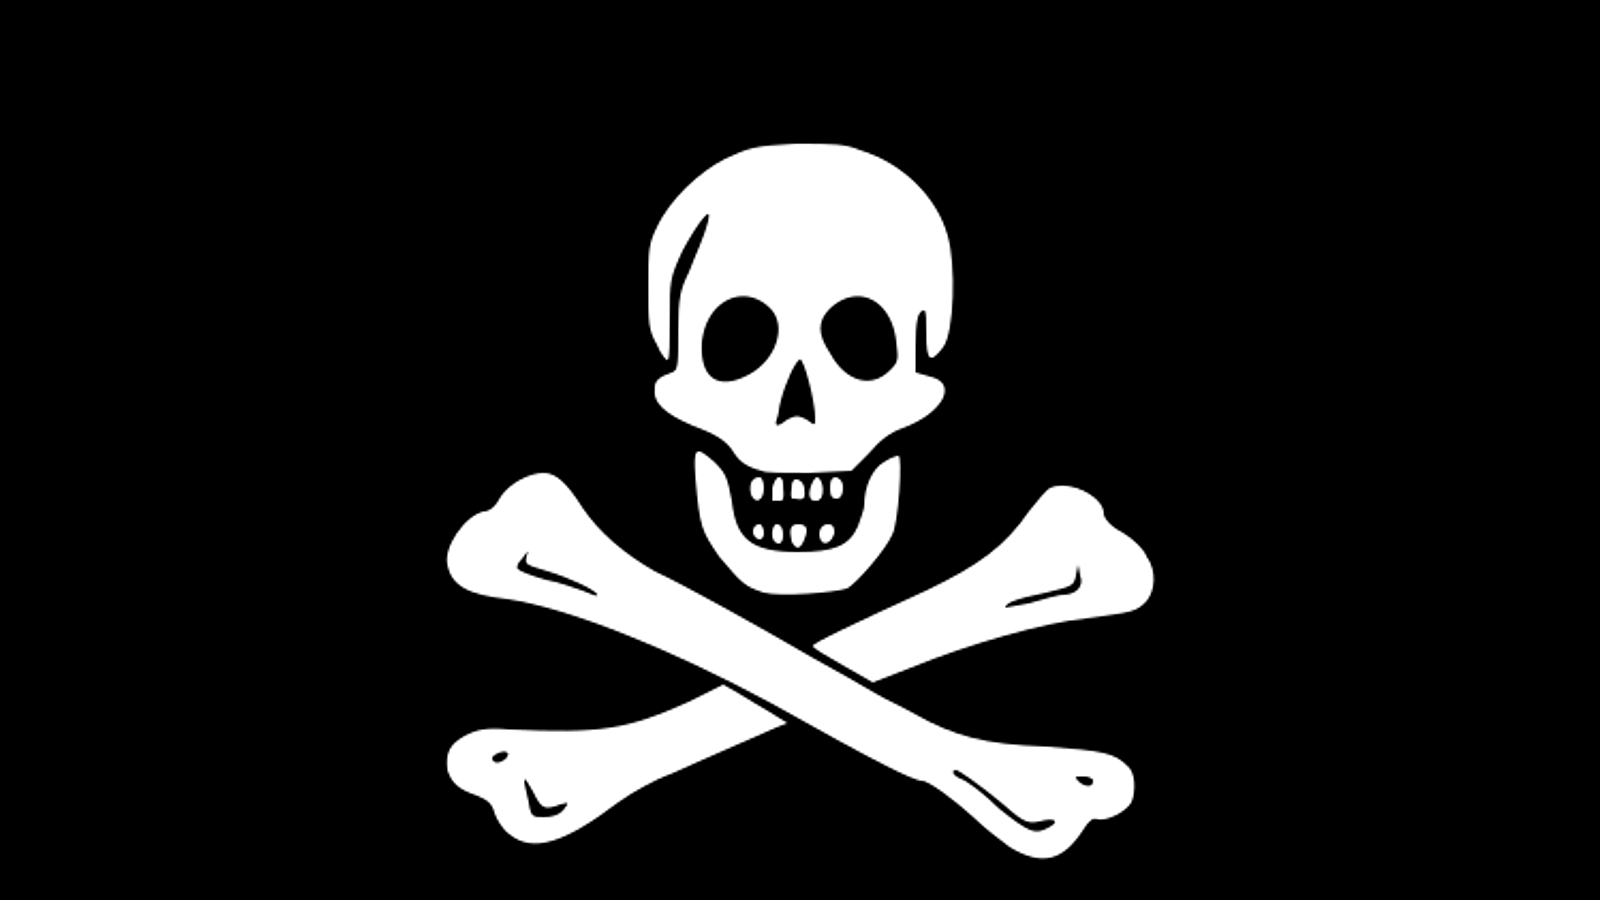 pirate skulls and crossbones